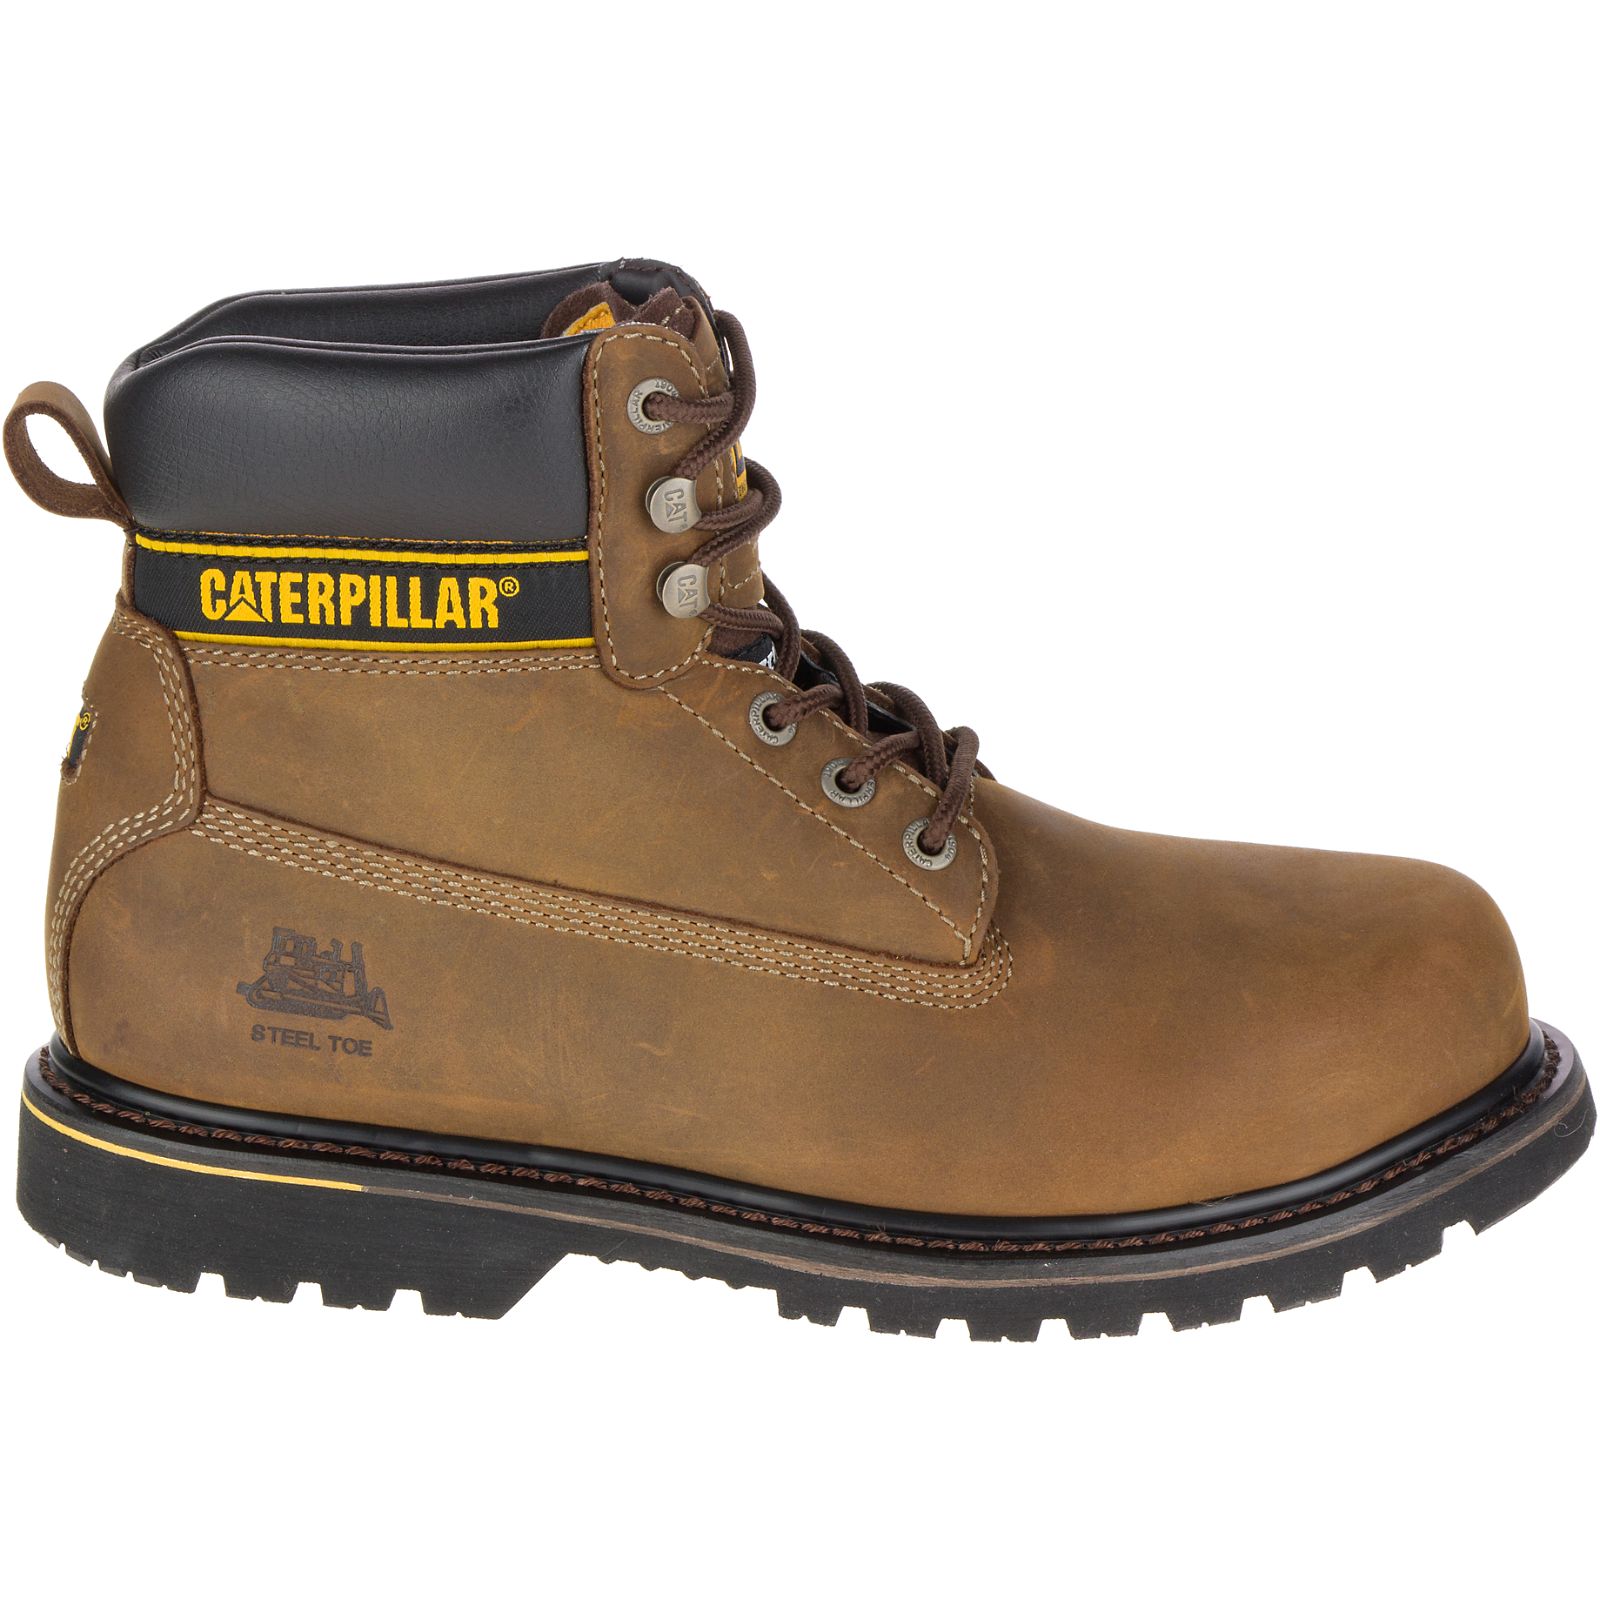 Men's Caterpillar Holton Steel Toe S3 Hro Src Work Boots Dark Brown | Cat-247085